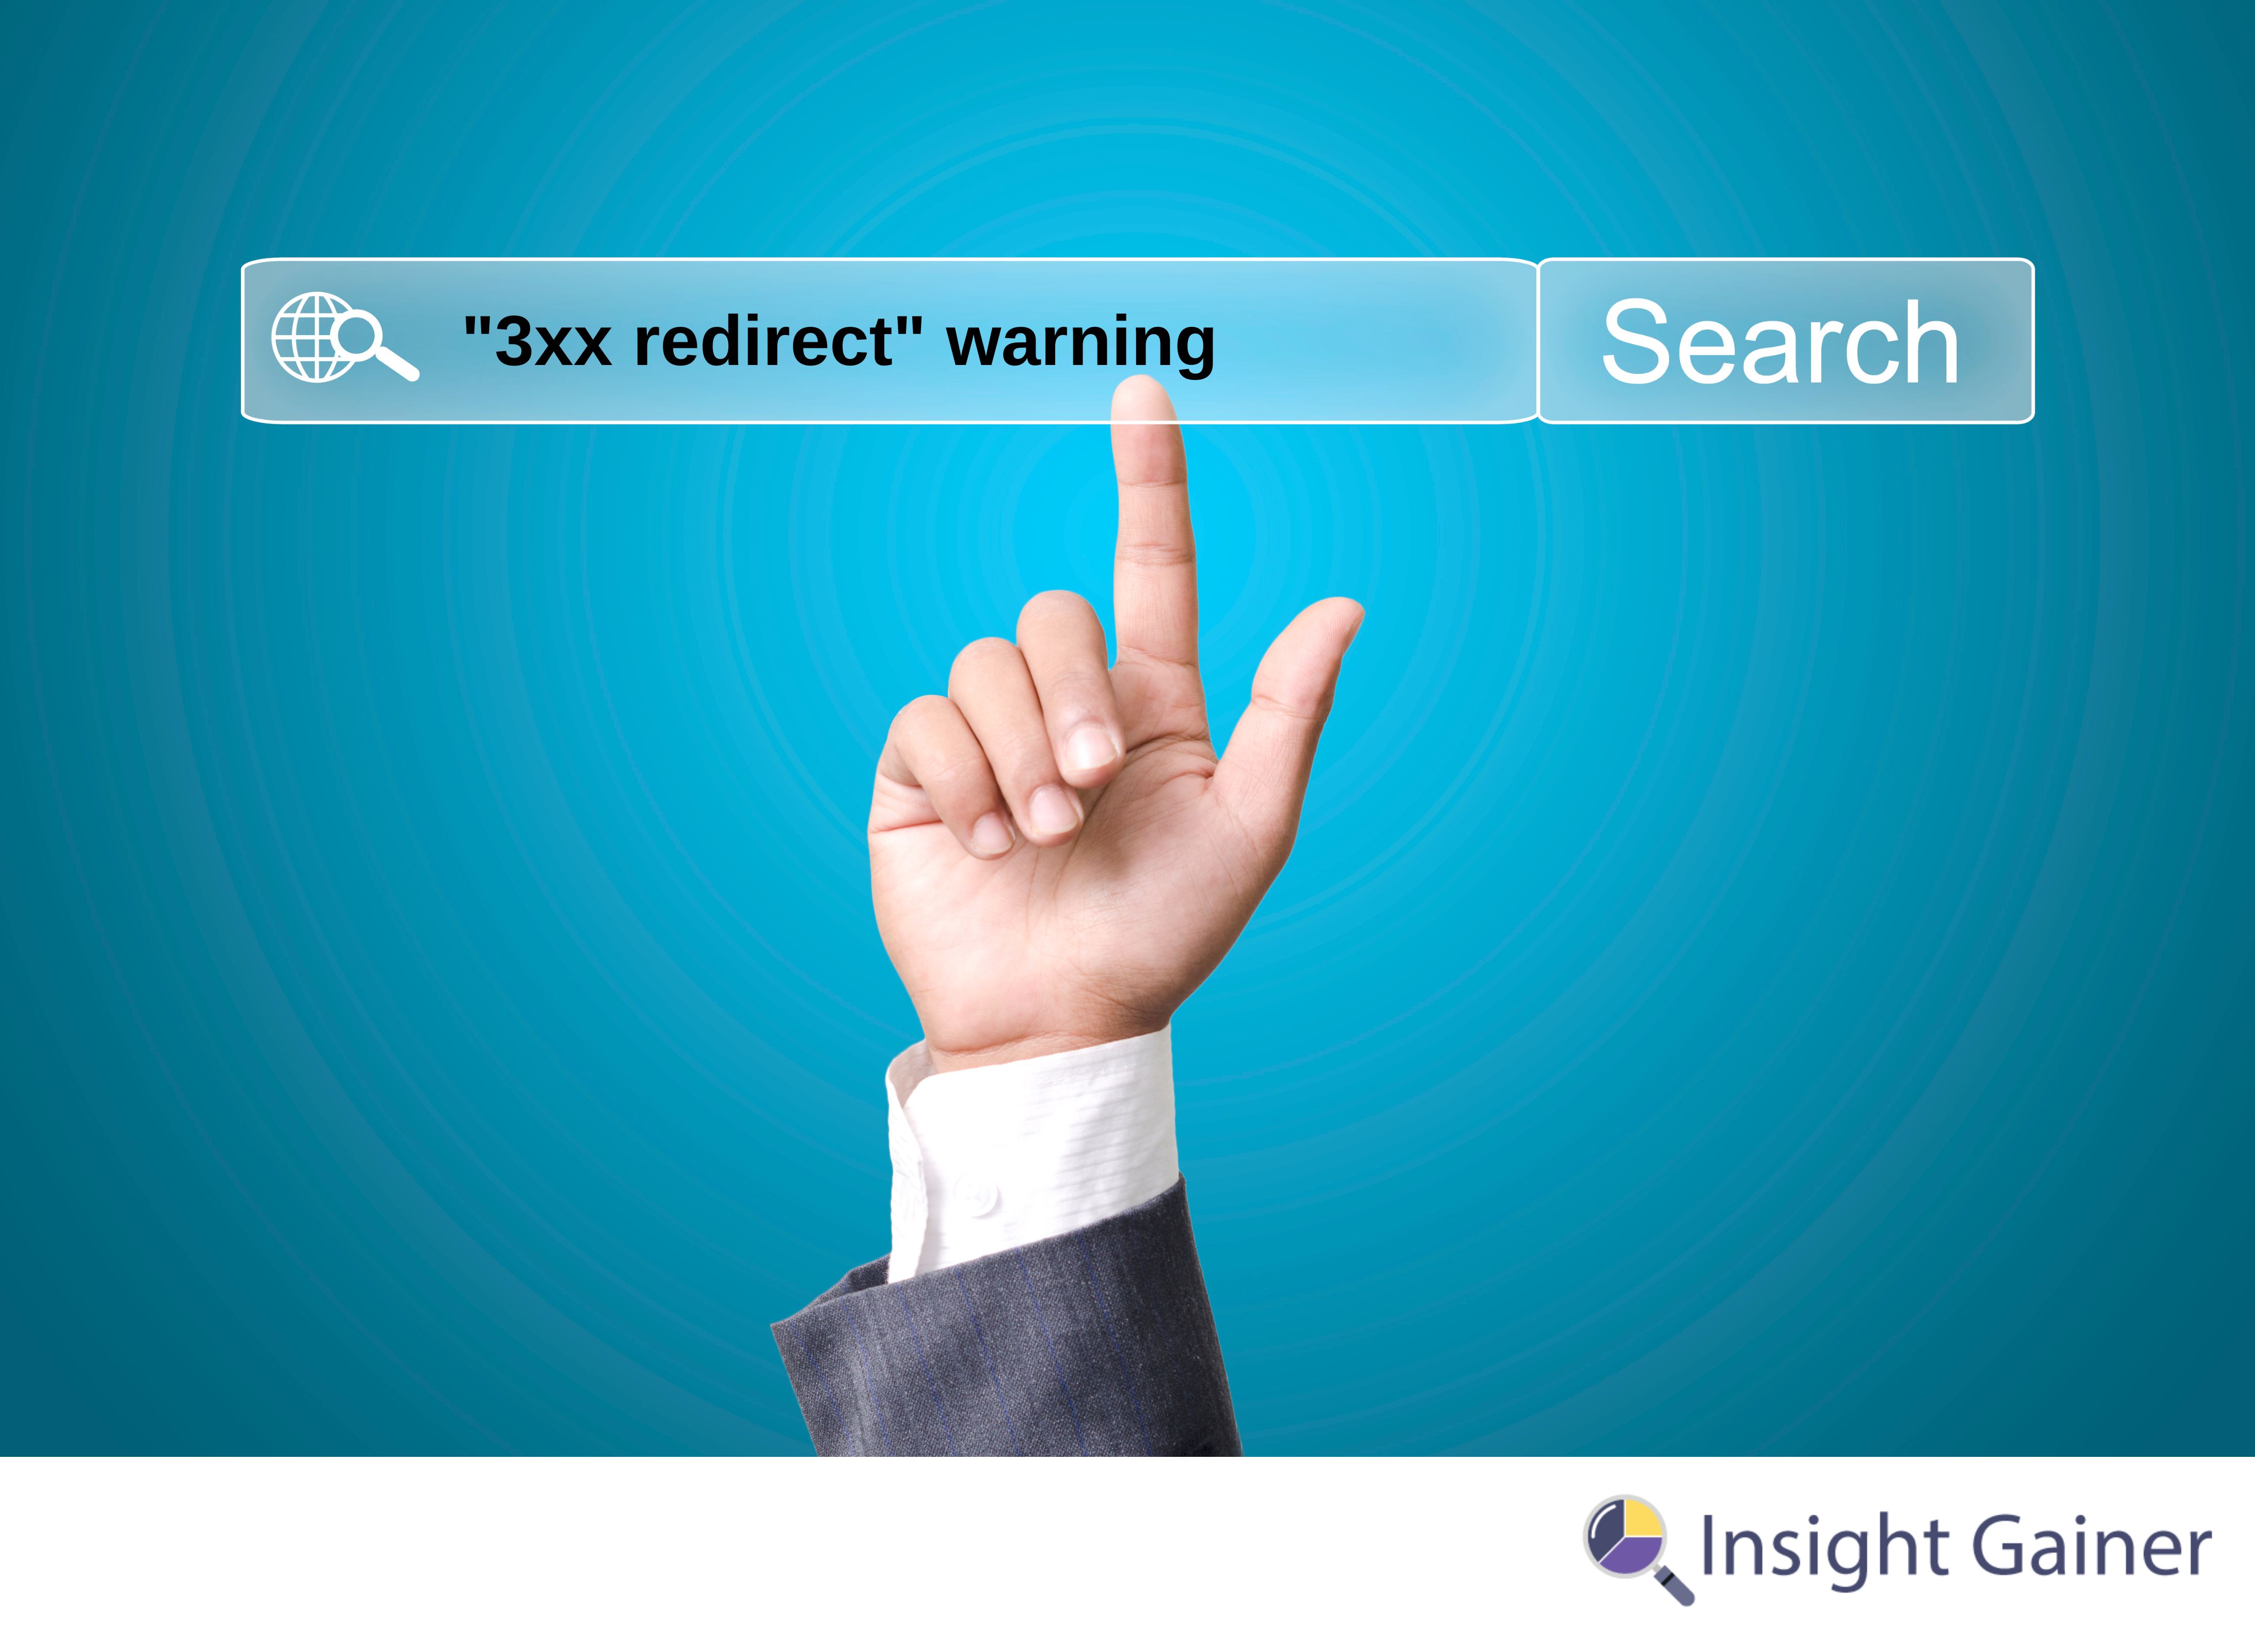 3xx redirect, Insight Gainer